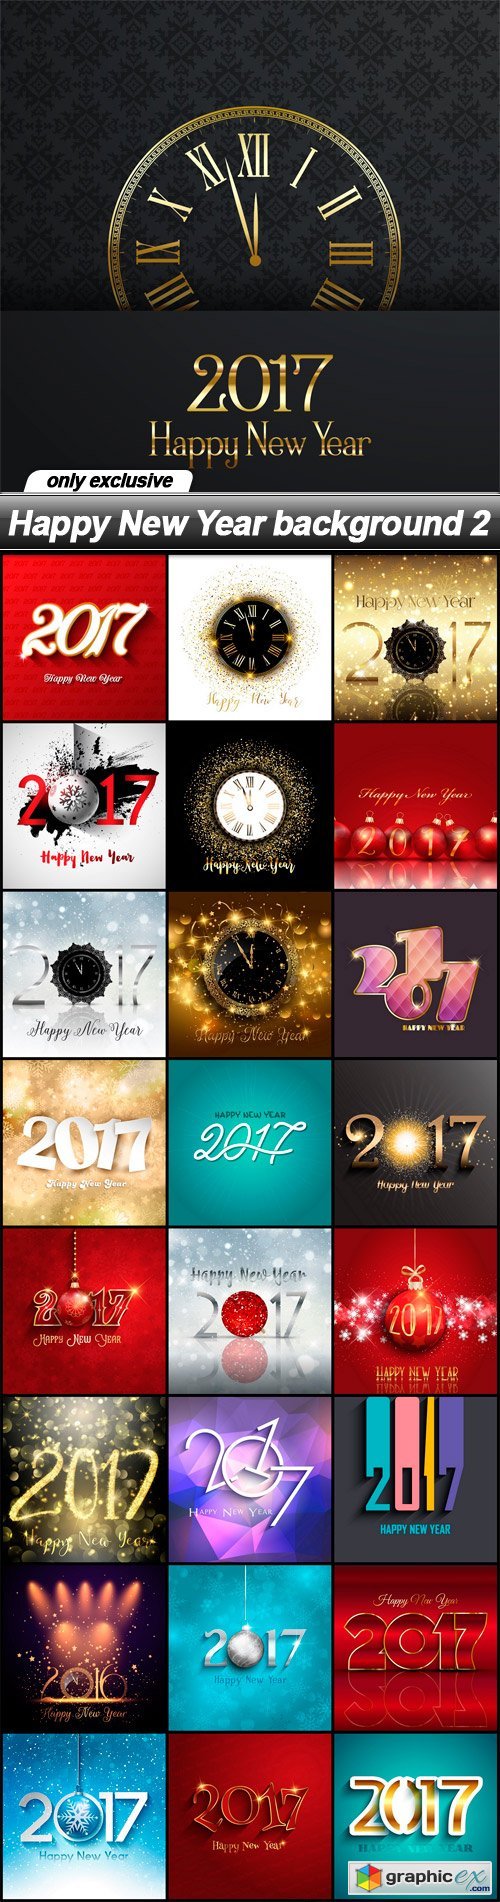 Happy New Year background 2 - 25 EPS